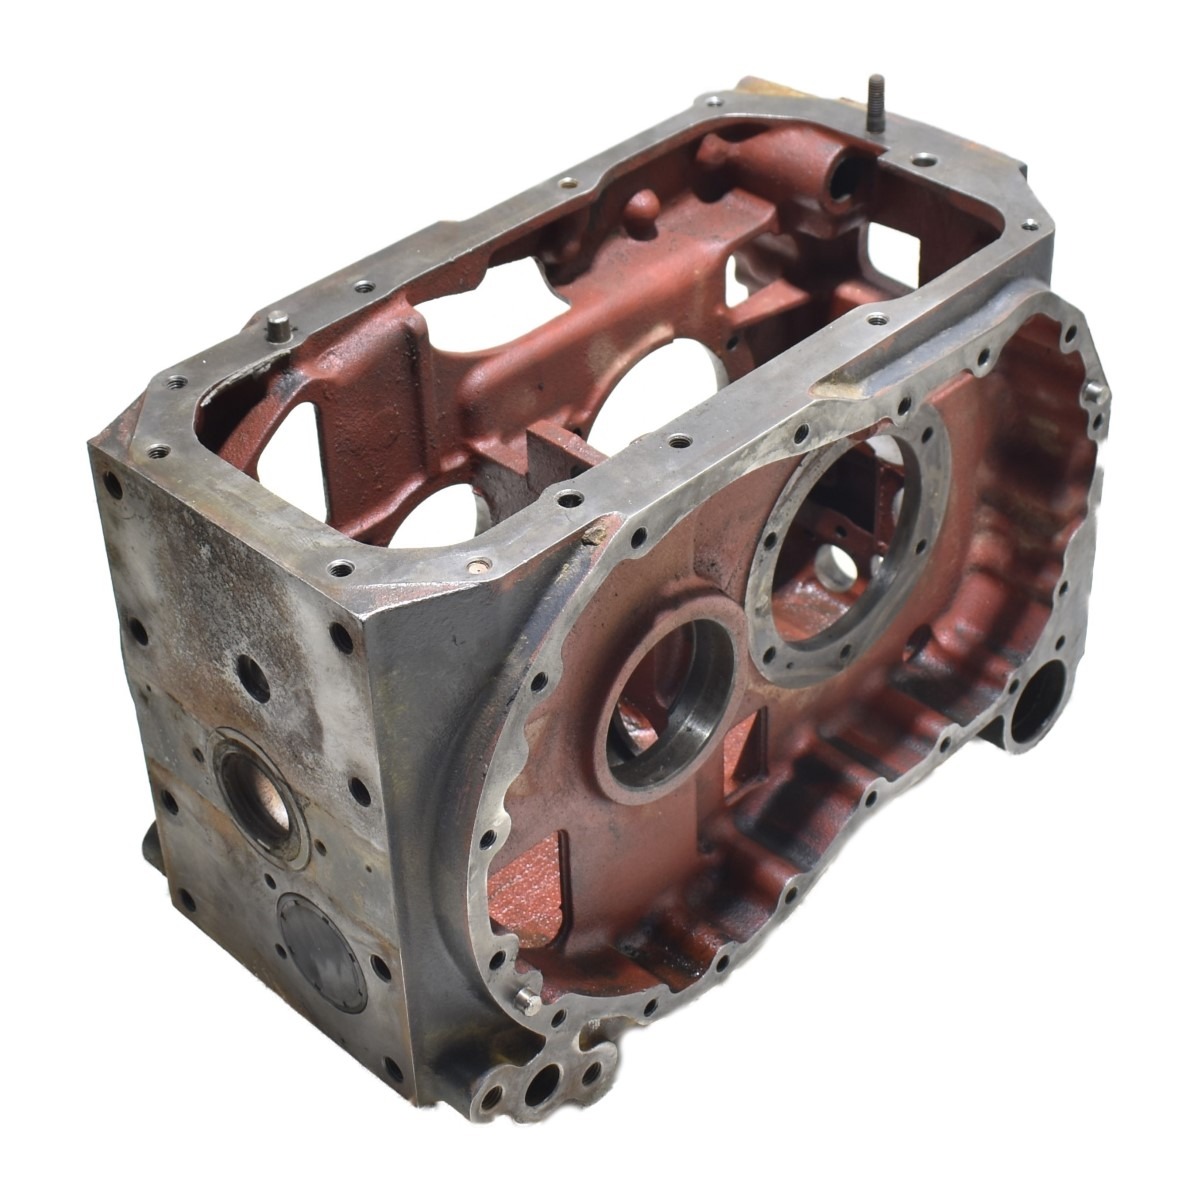 Achterbrug behuizing achterbrug gearbox Iseki TA230 landleader Origineel onderdeel nummer: 1560-240-001-40 1560-240-0014-0 156024000140 1560-240-001-50 1560-240-0015-0 156024000150